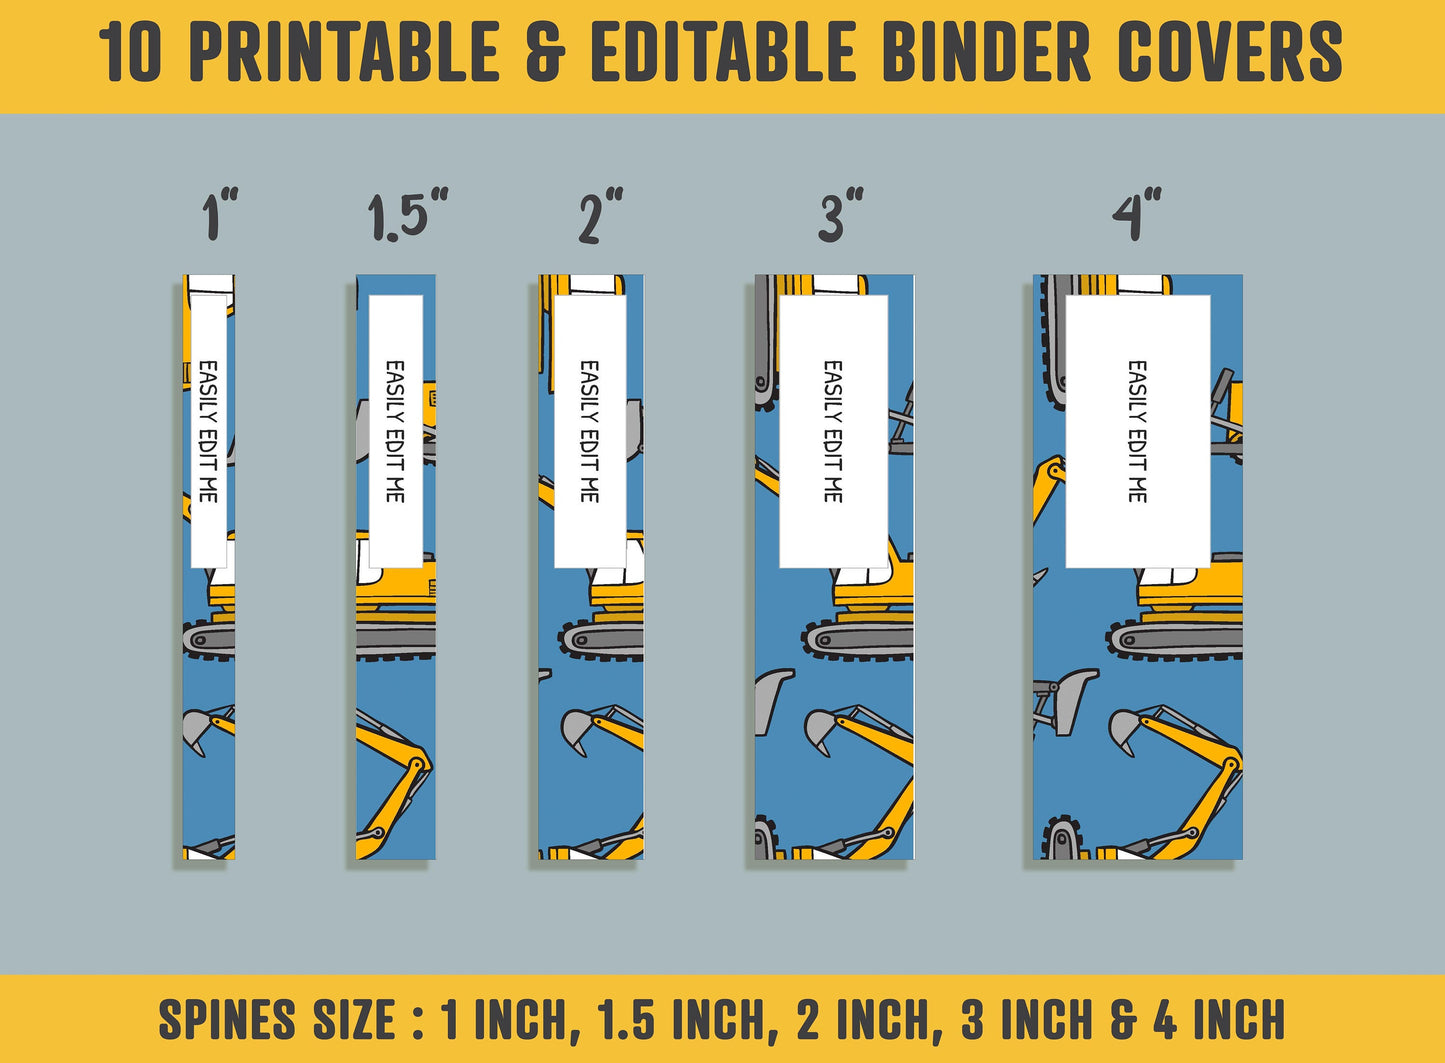 Construction Truck Binder Cover, 10 Printable & Editable Binder Covers+Spines, Binder Cover Inserts, Planner Template, Teacher/School Binder